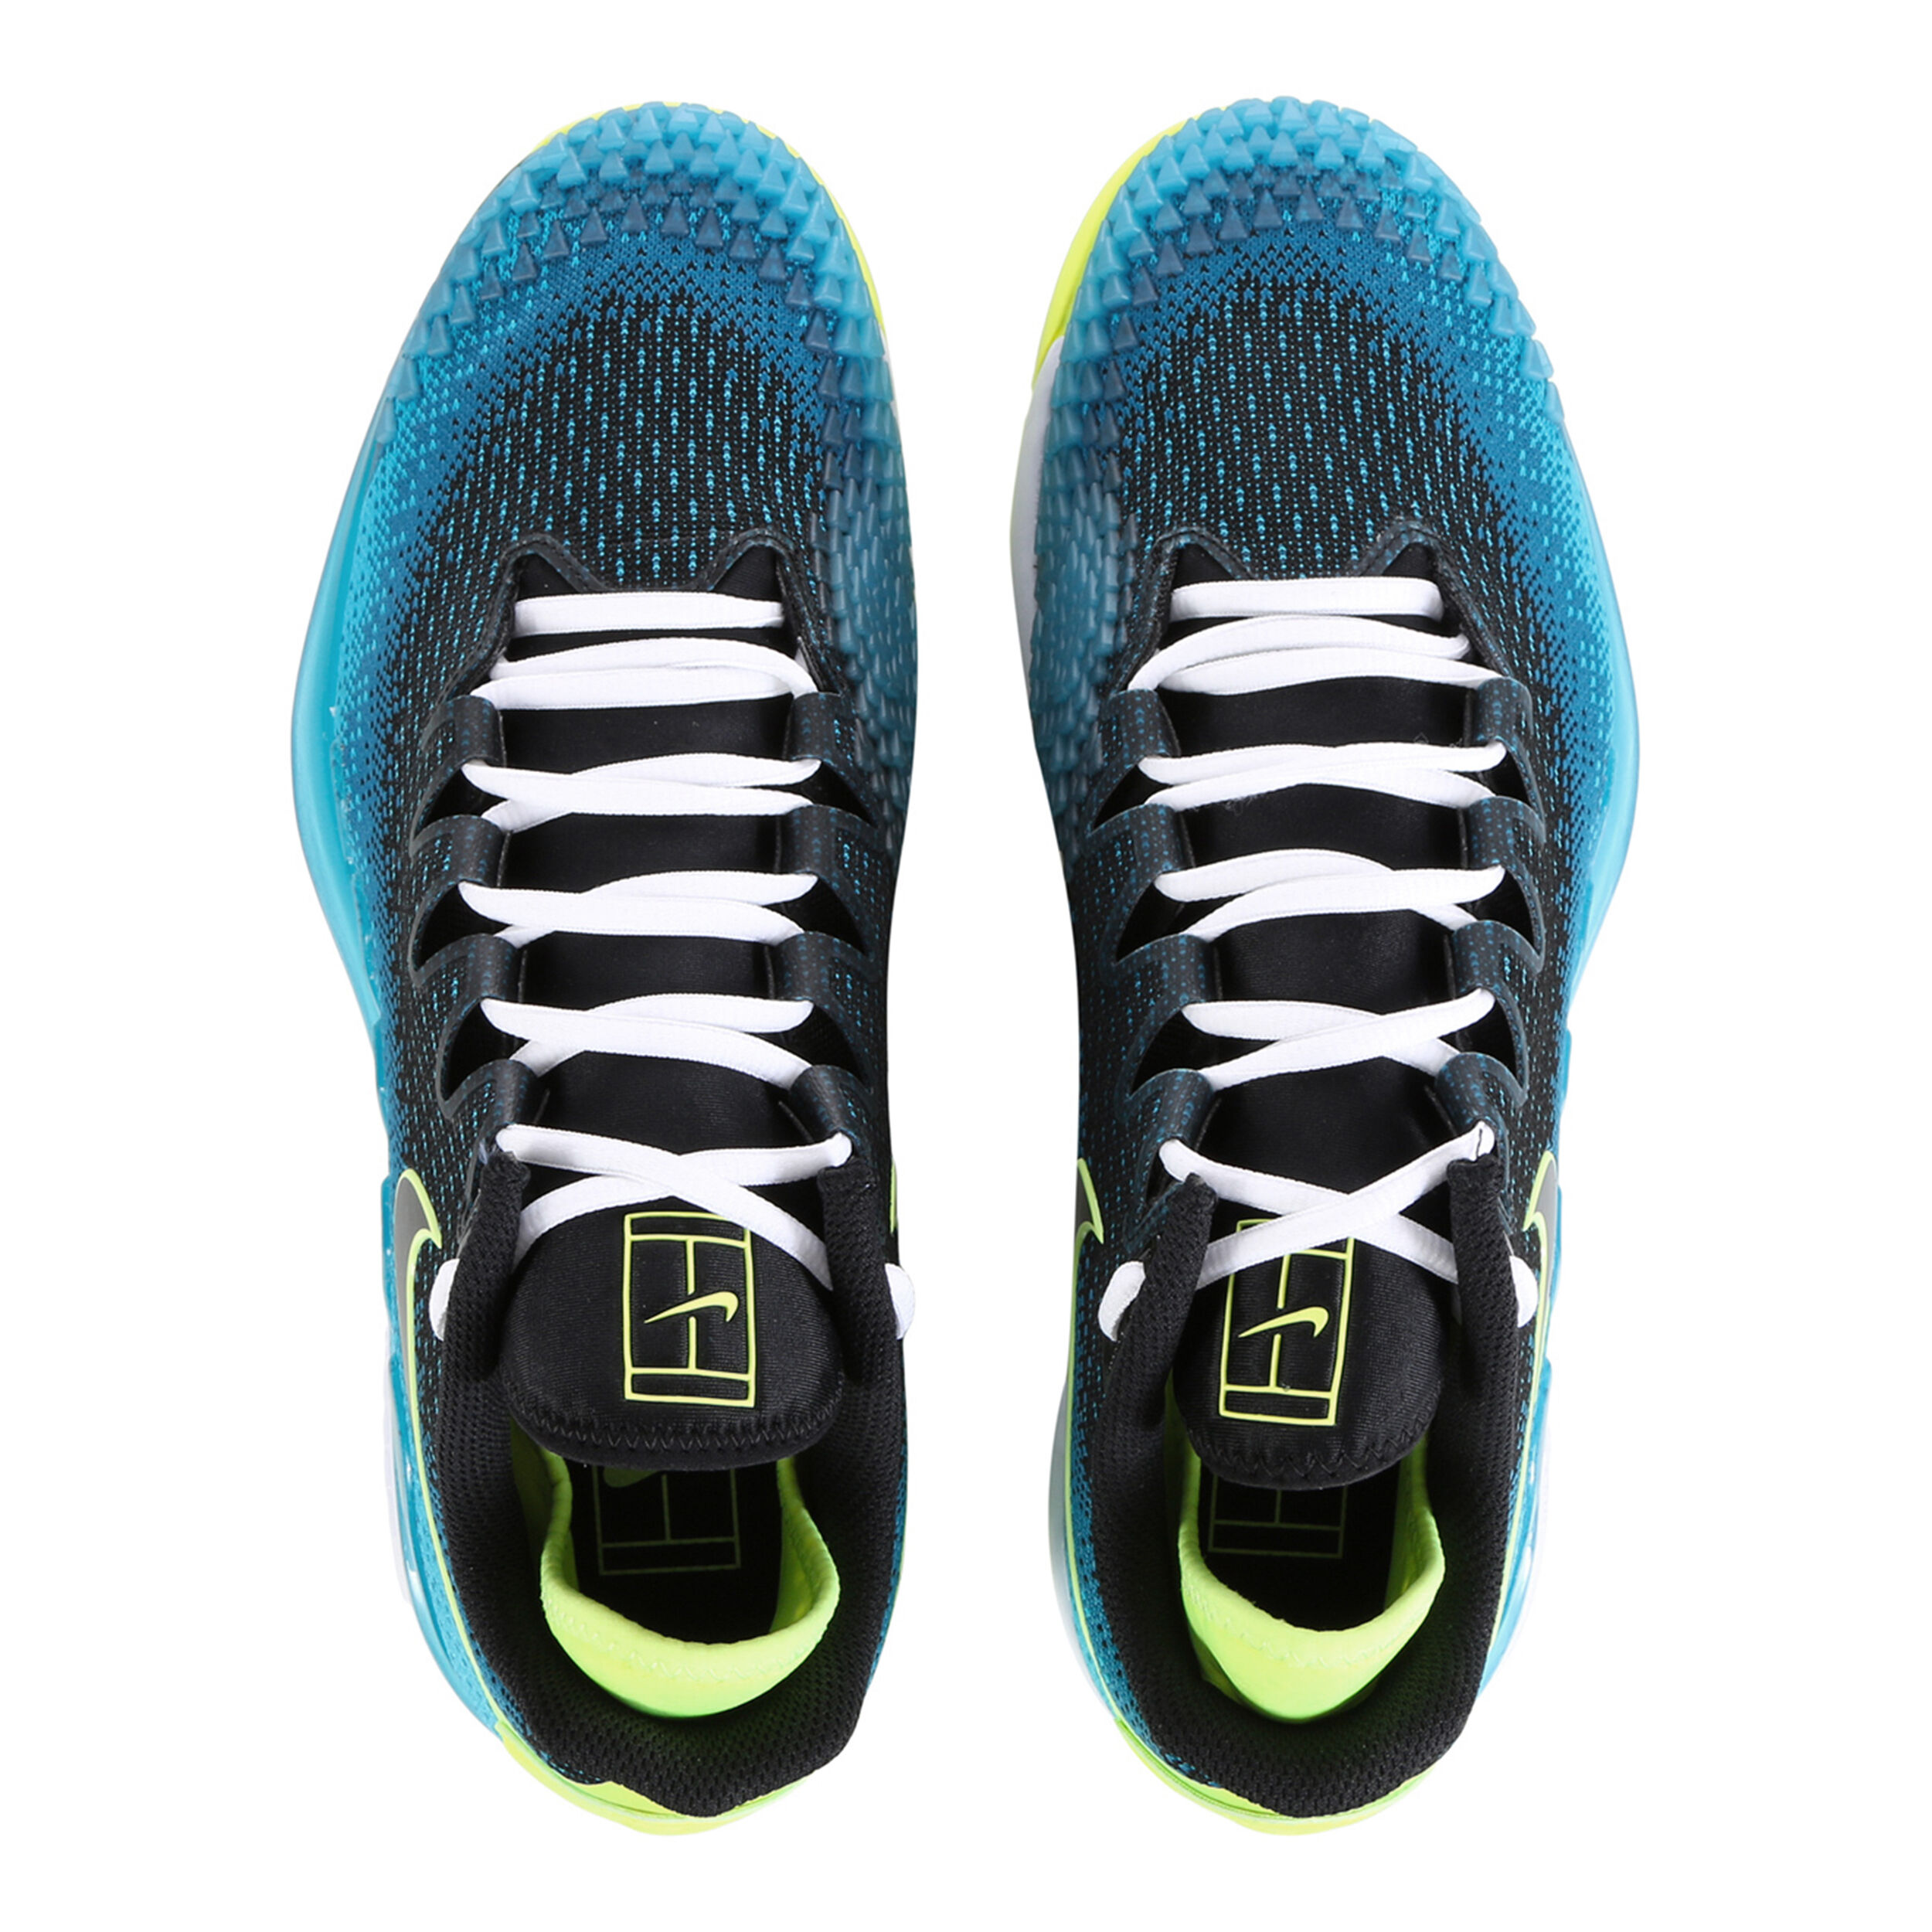 buy Nike Air Zoom Vapor X Knit All Court Shoe Men - Turquoise ...